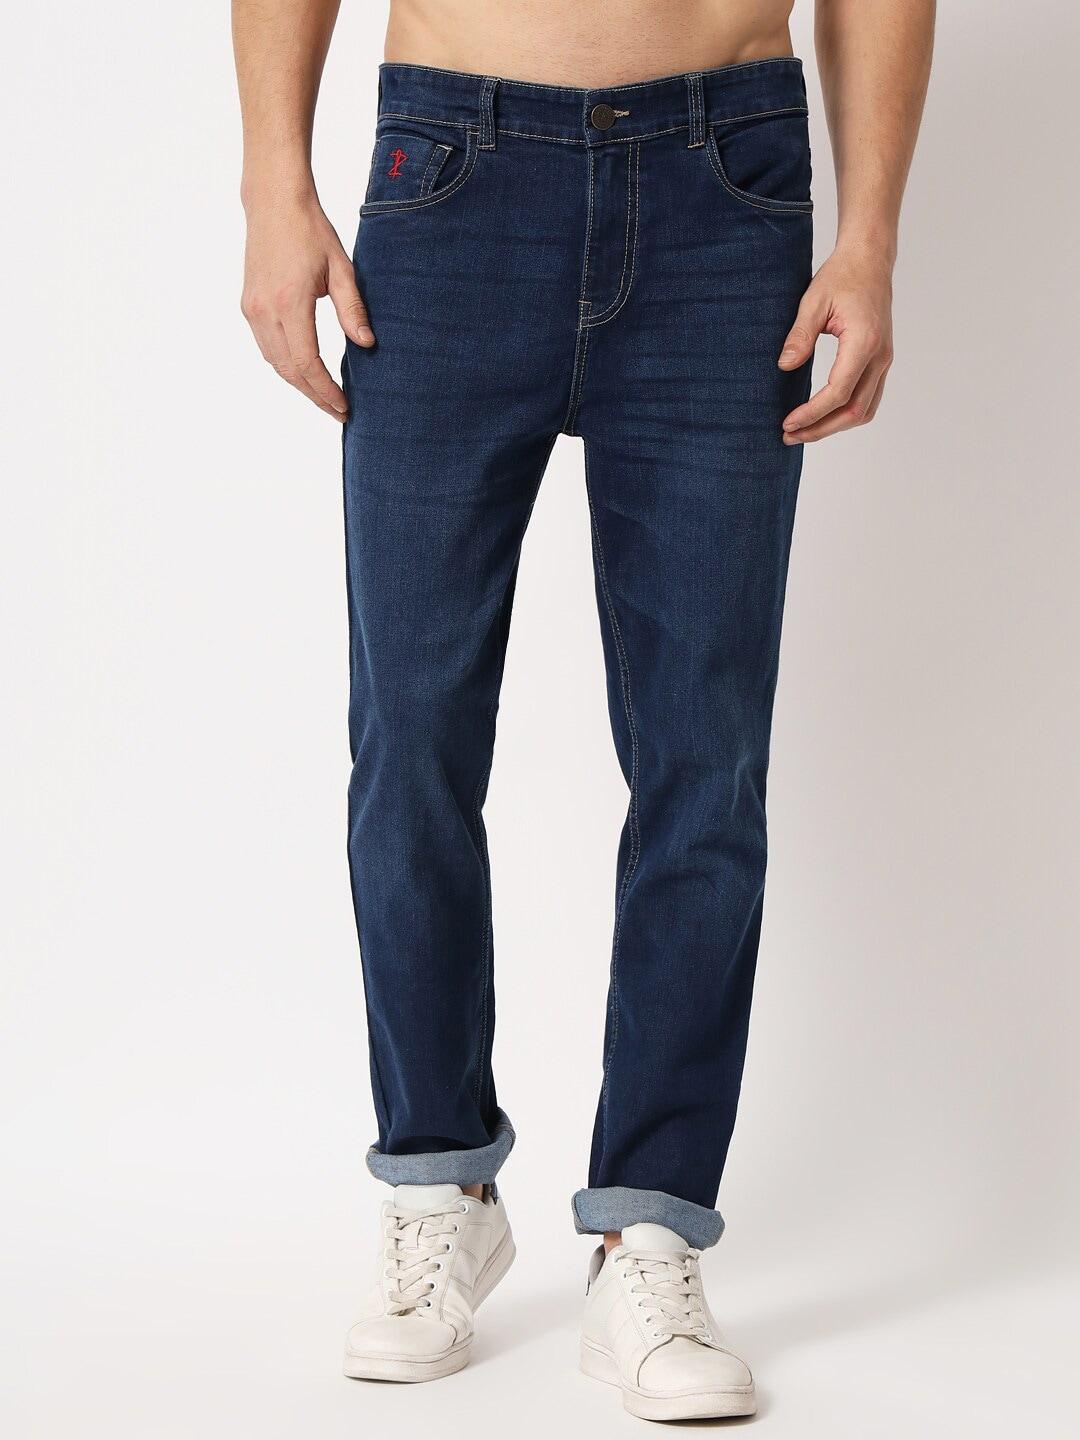 aazing london men navy blue jean slim fit light fade cotton acid wash stretchable jeans